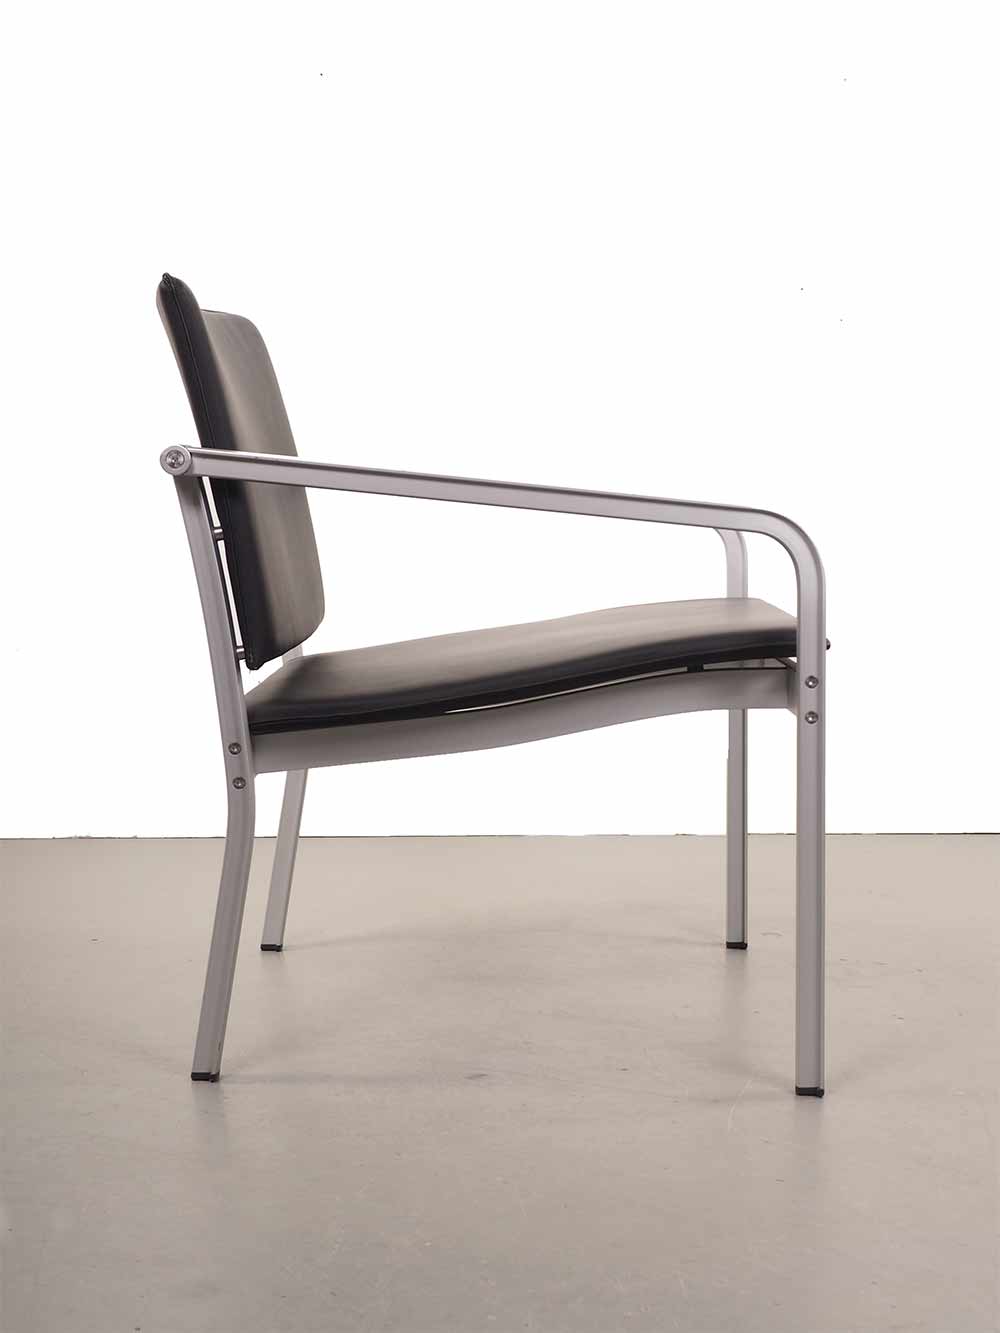 THONET LOUNGE stoel aluminium zwart leer roter punkt essen